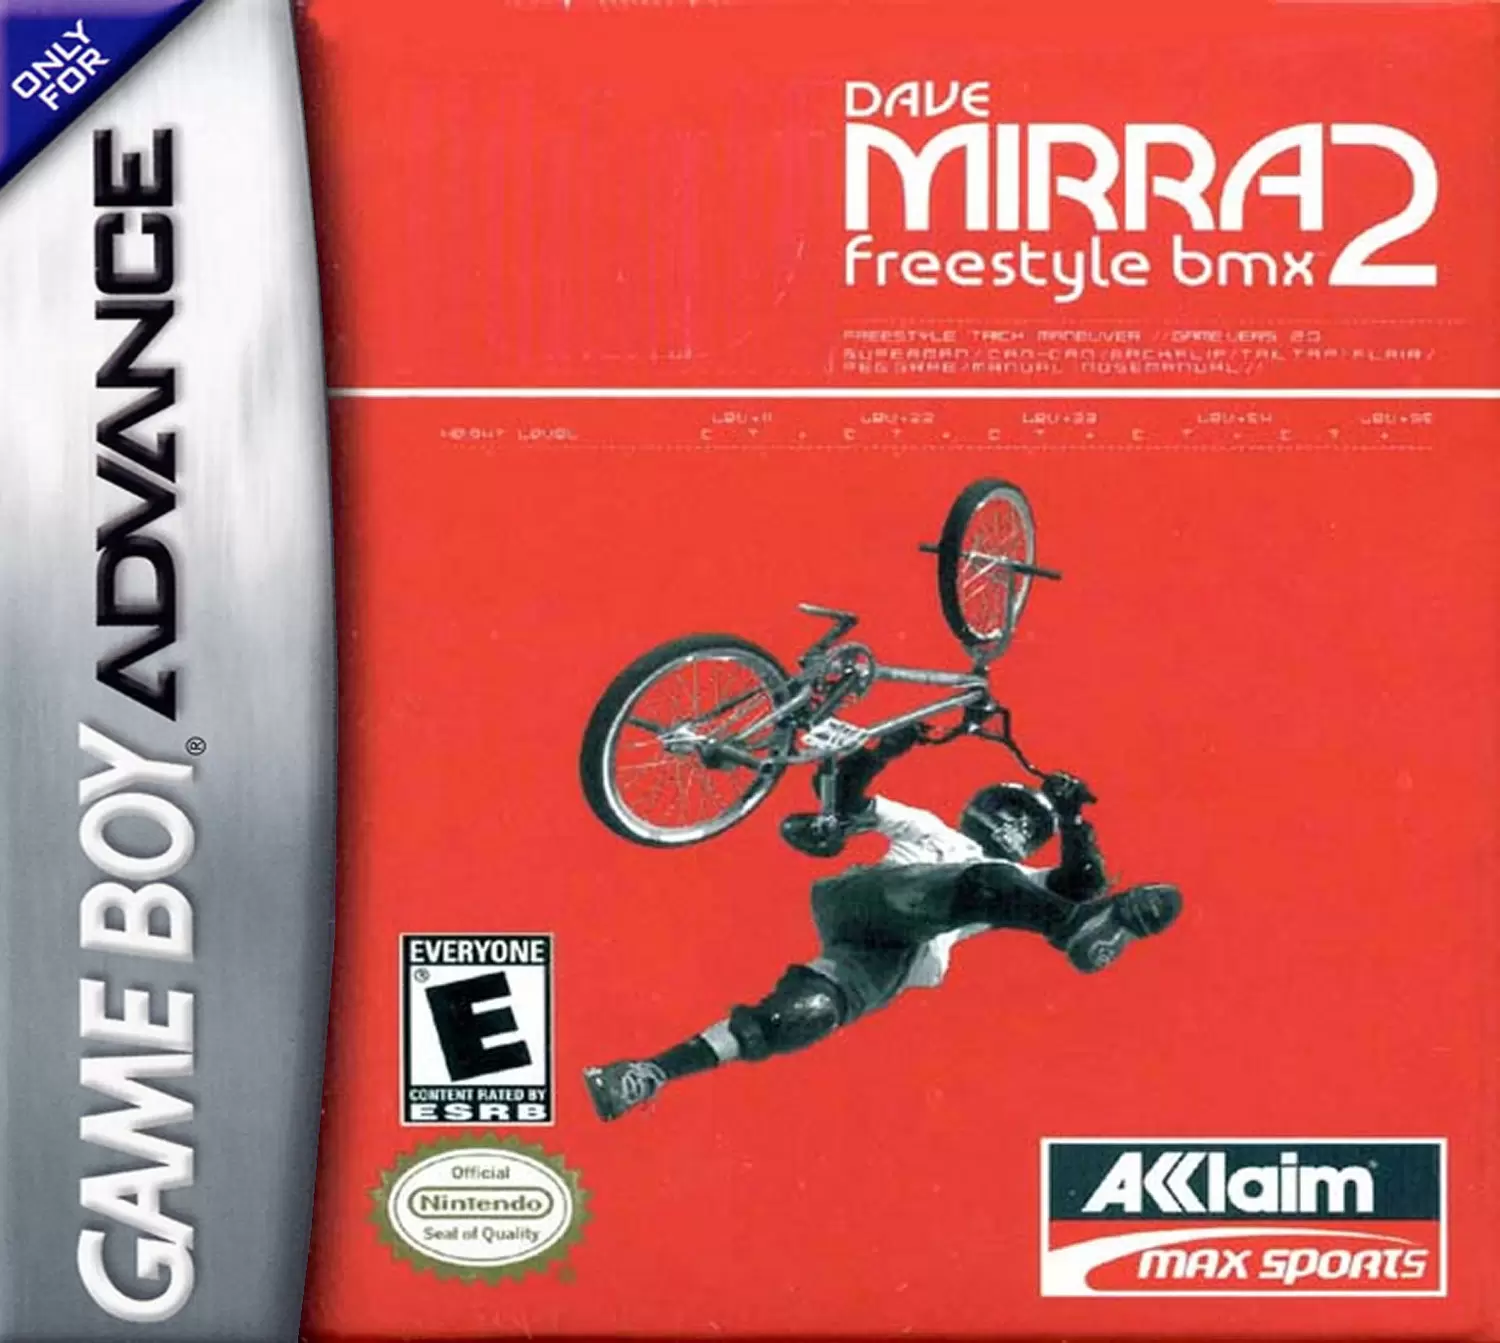 Game Boy Advance Games - Dave Mirra Freestyle BMX 2